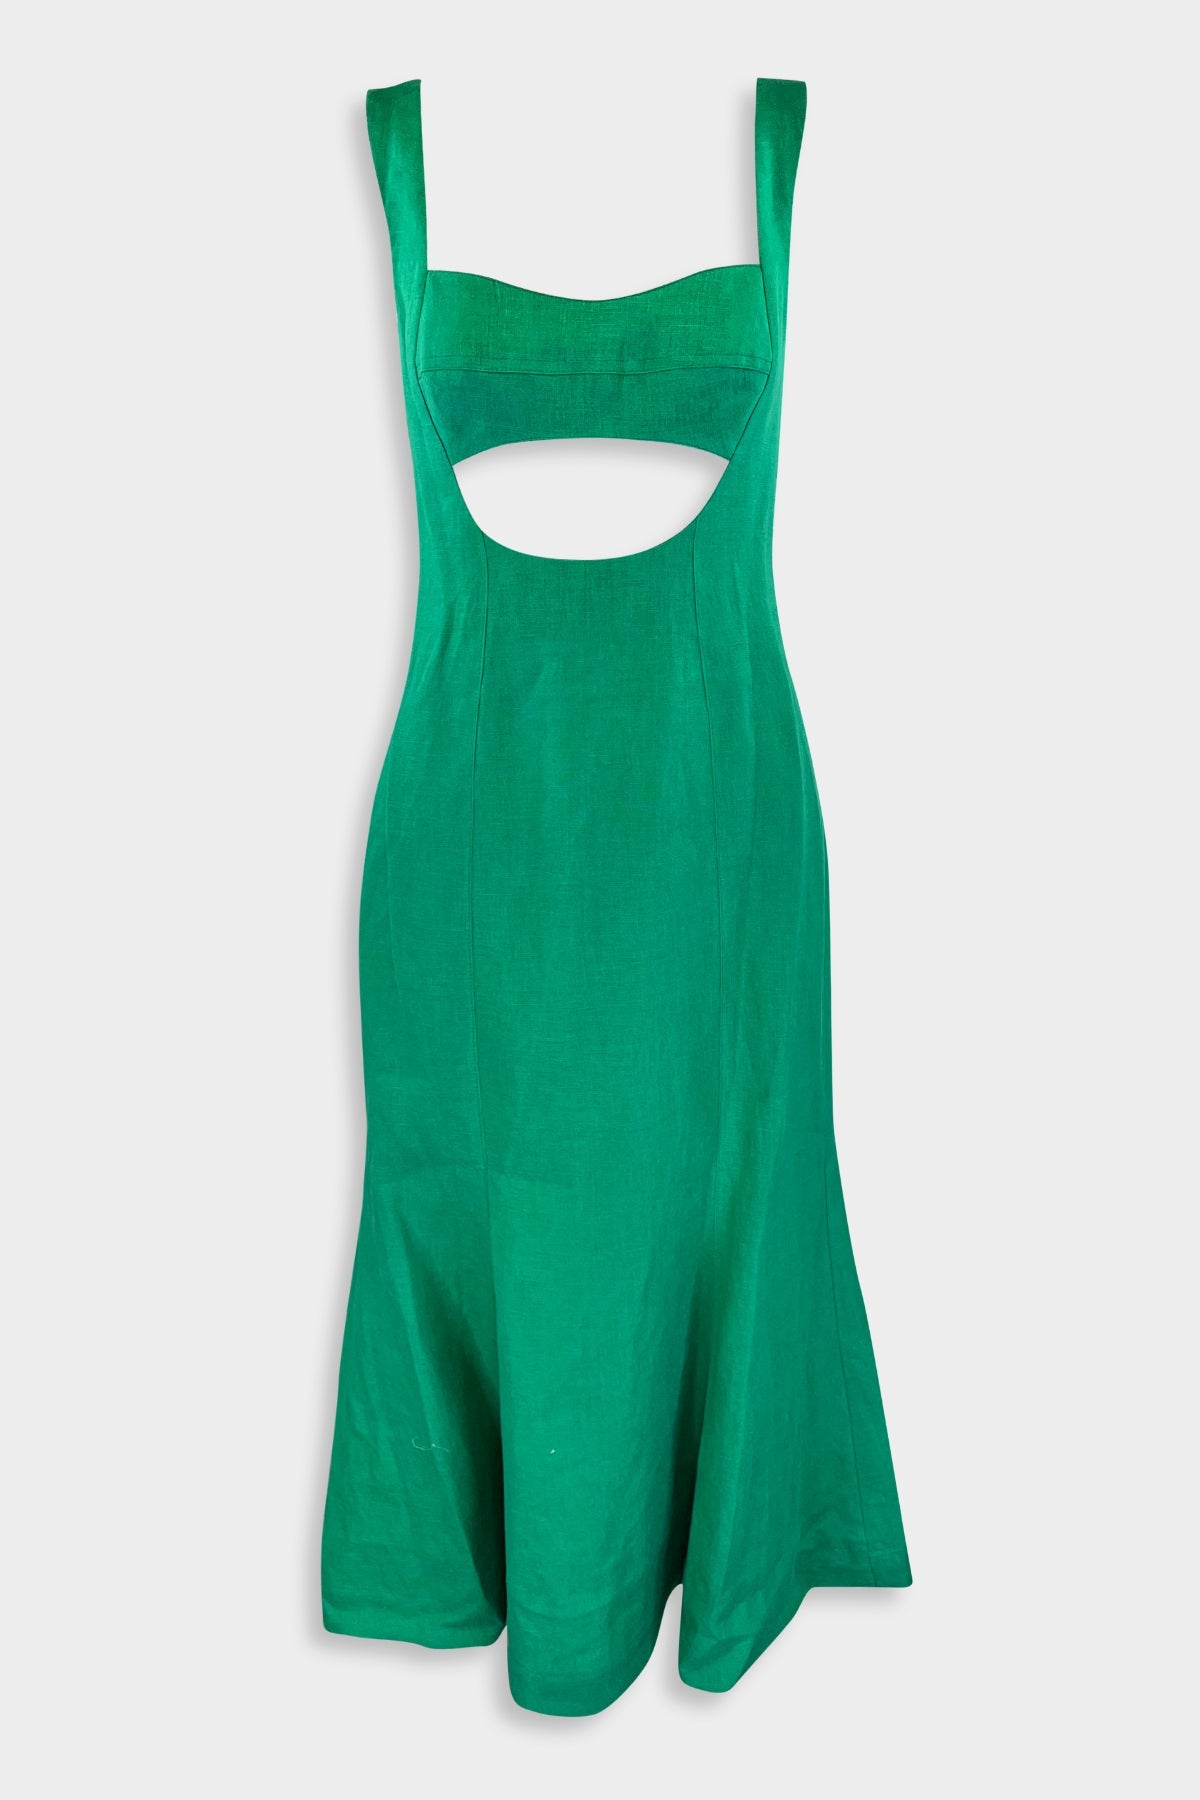 Eva Fluted Midi Dress in Kelly Green - shop-olivia.com